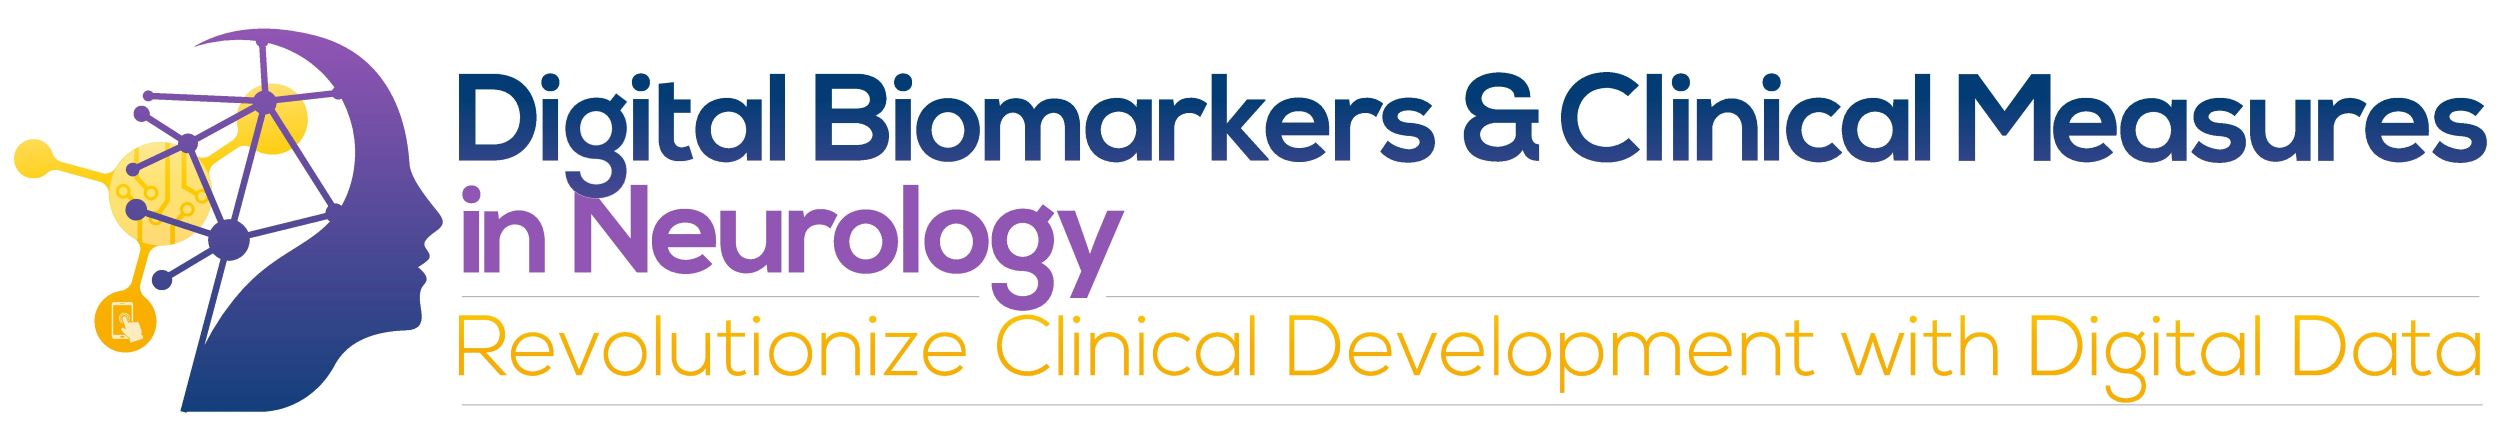 HW220216 29933 Digital Biomarkers & Clinical Measures in Neuroscience Summit logo FINAL (3)